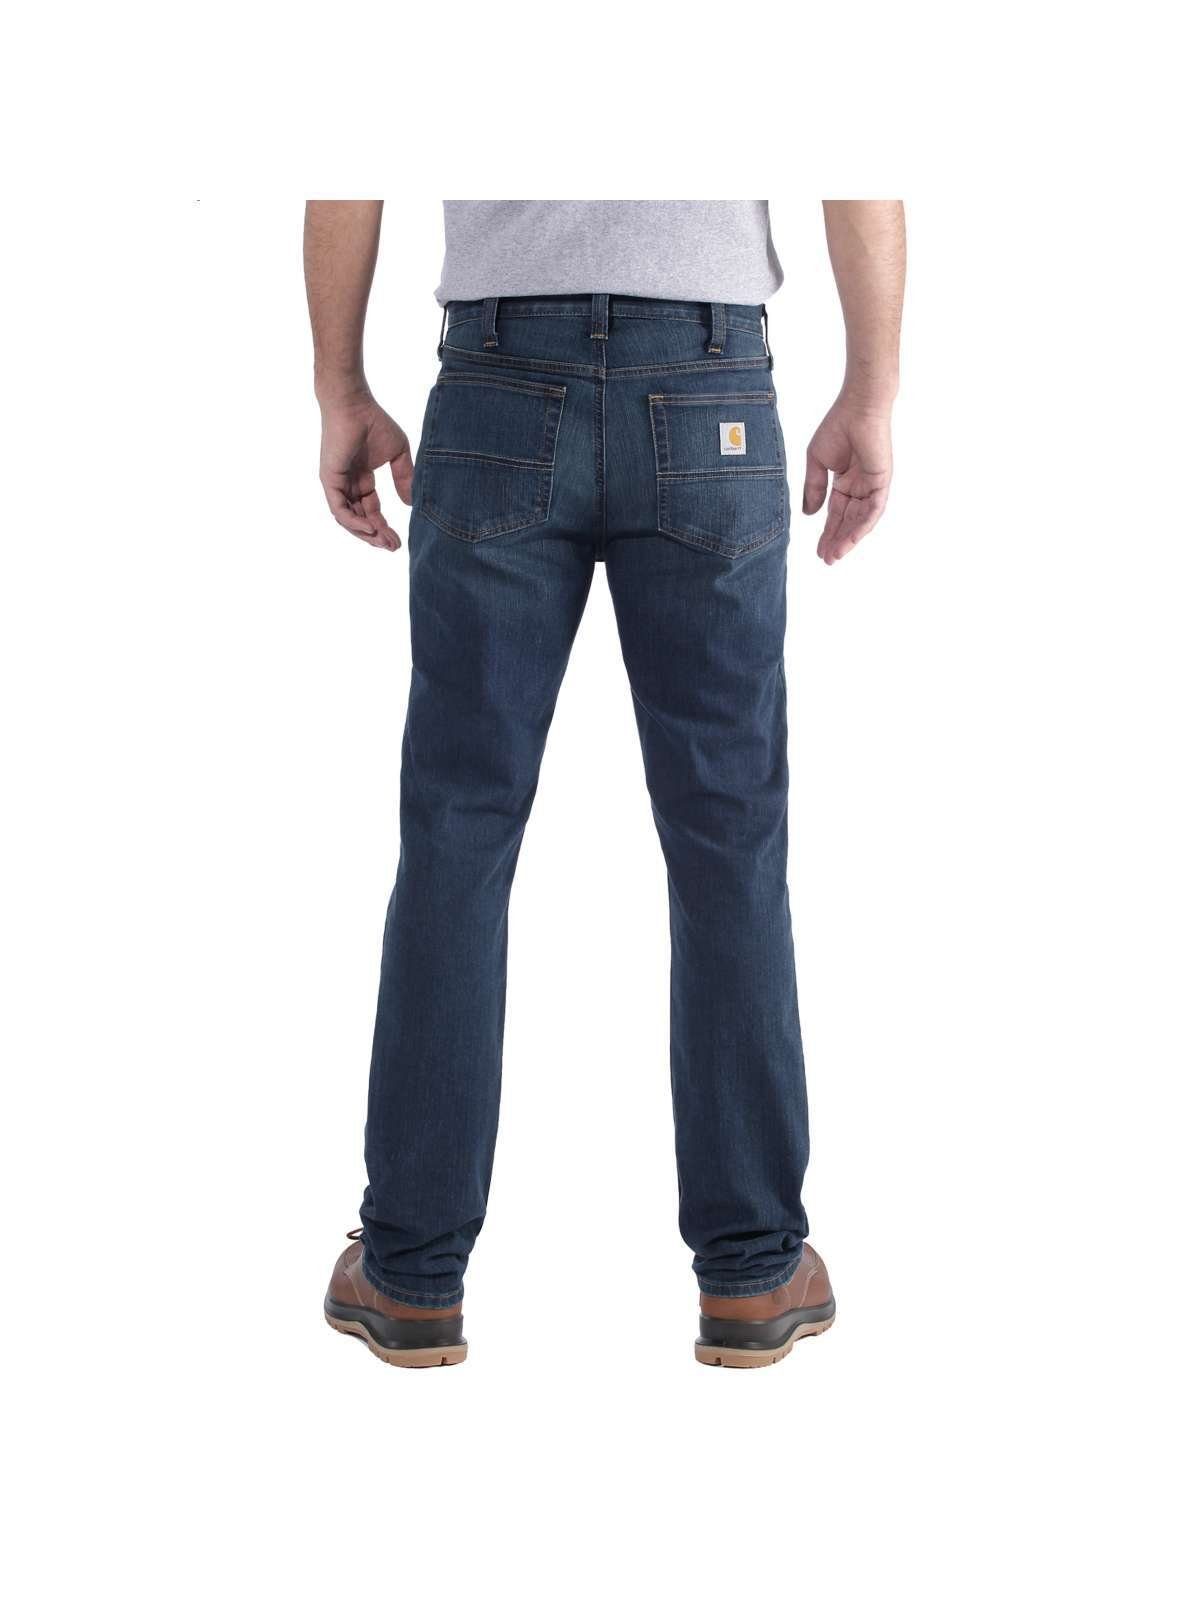 Carhartt Arbeitshose Carhartt Jeans superior Flex Rugged dunkelblau